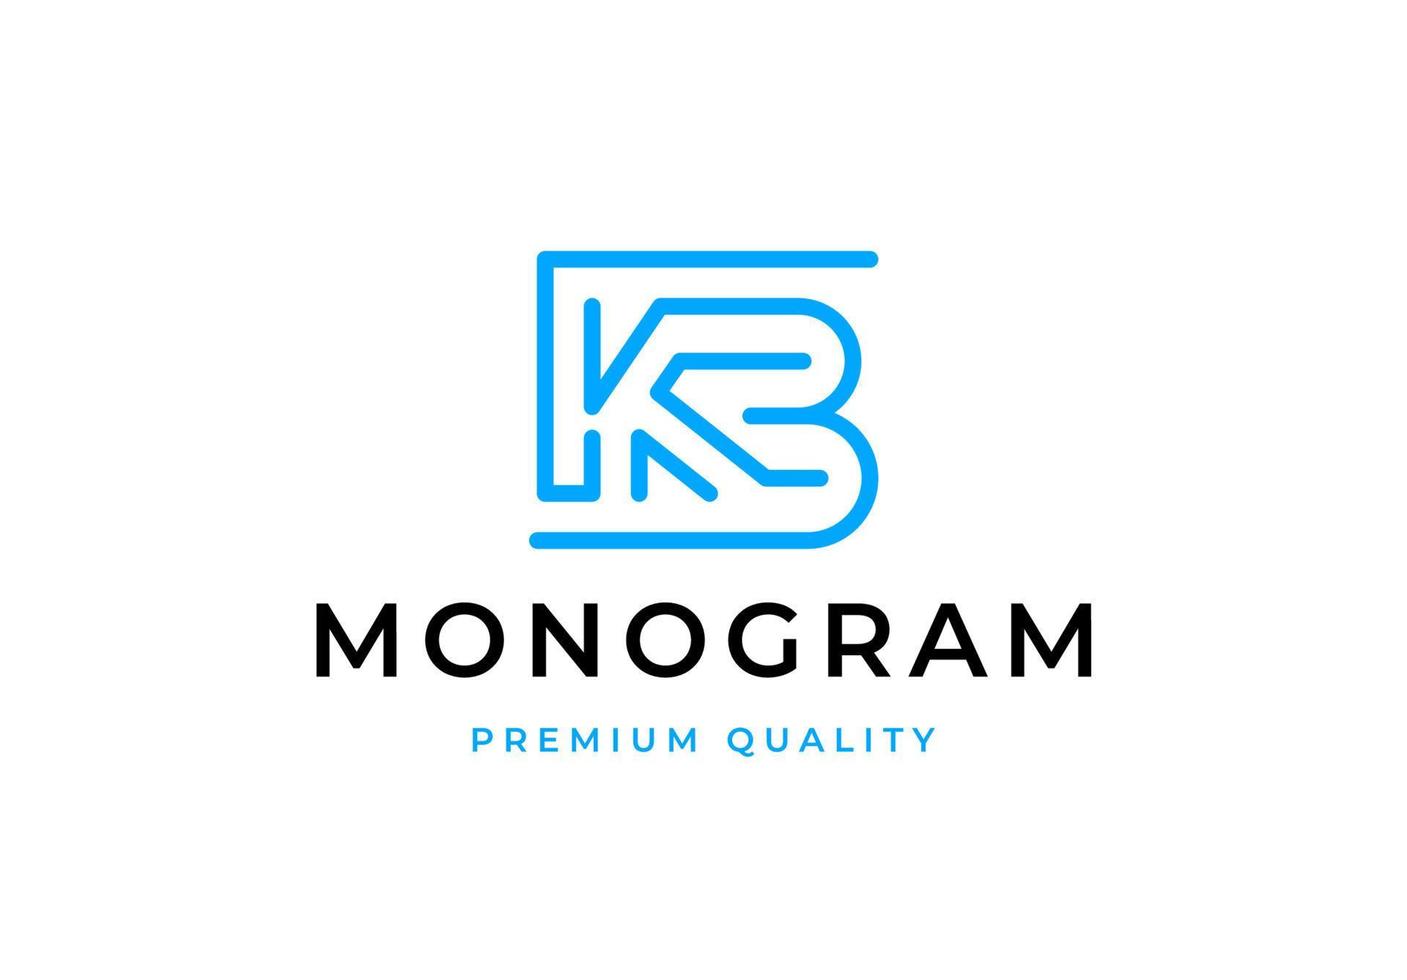 diseño de logotipo kb inicial de monograma de letra moderna vector